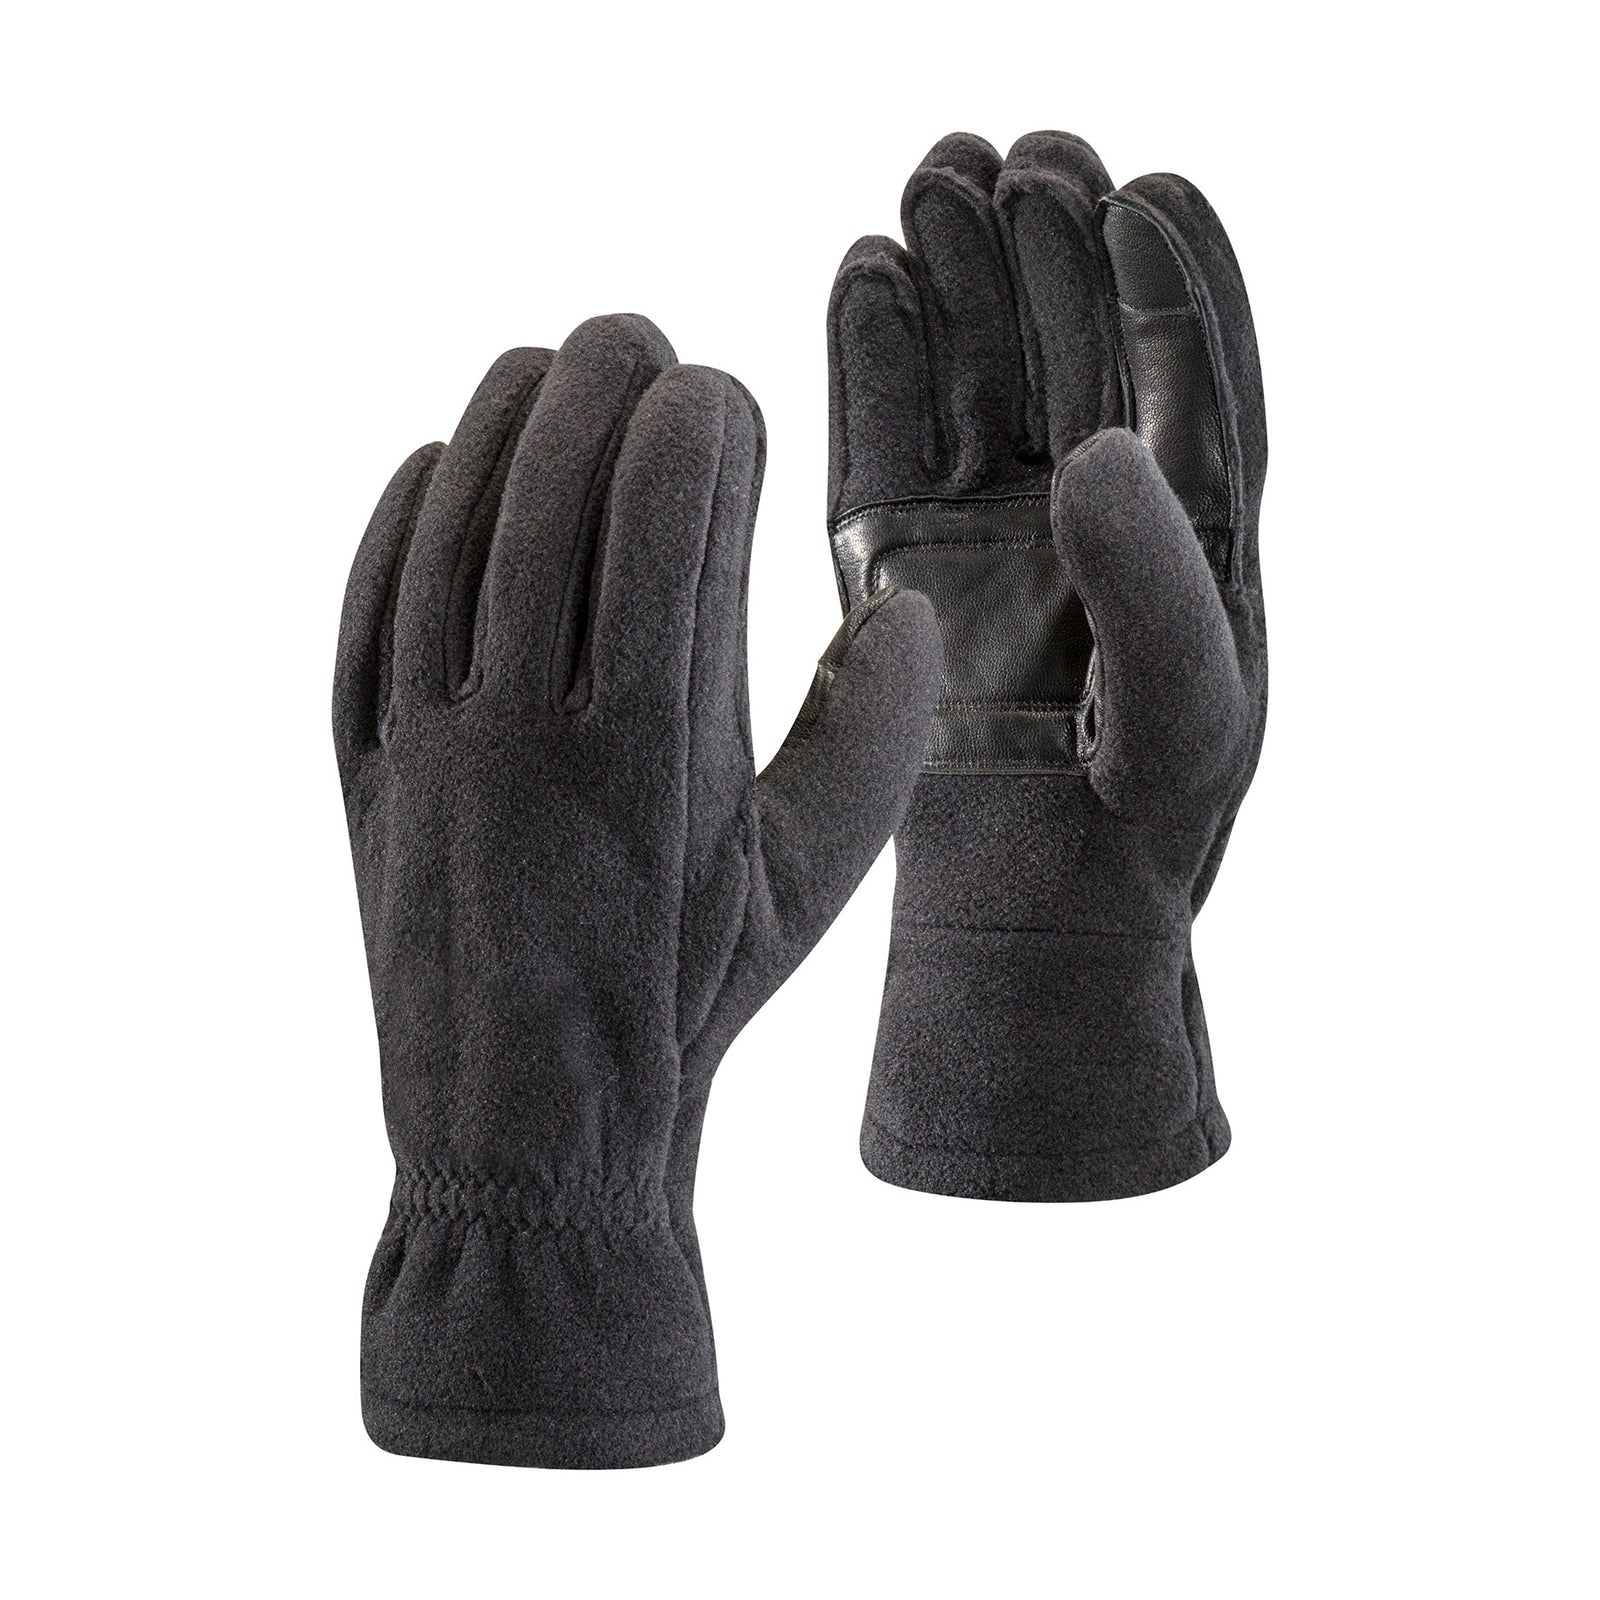 a pair of black fleece gloves